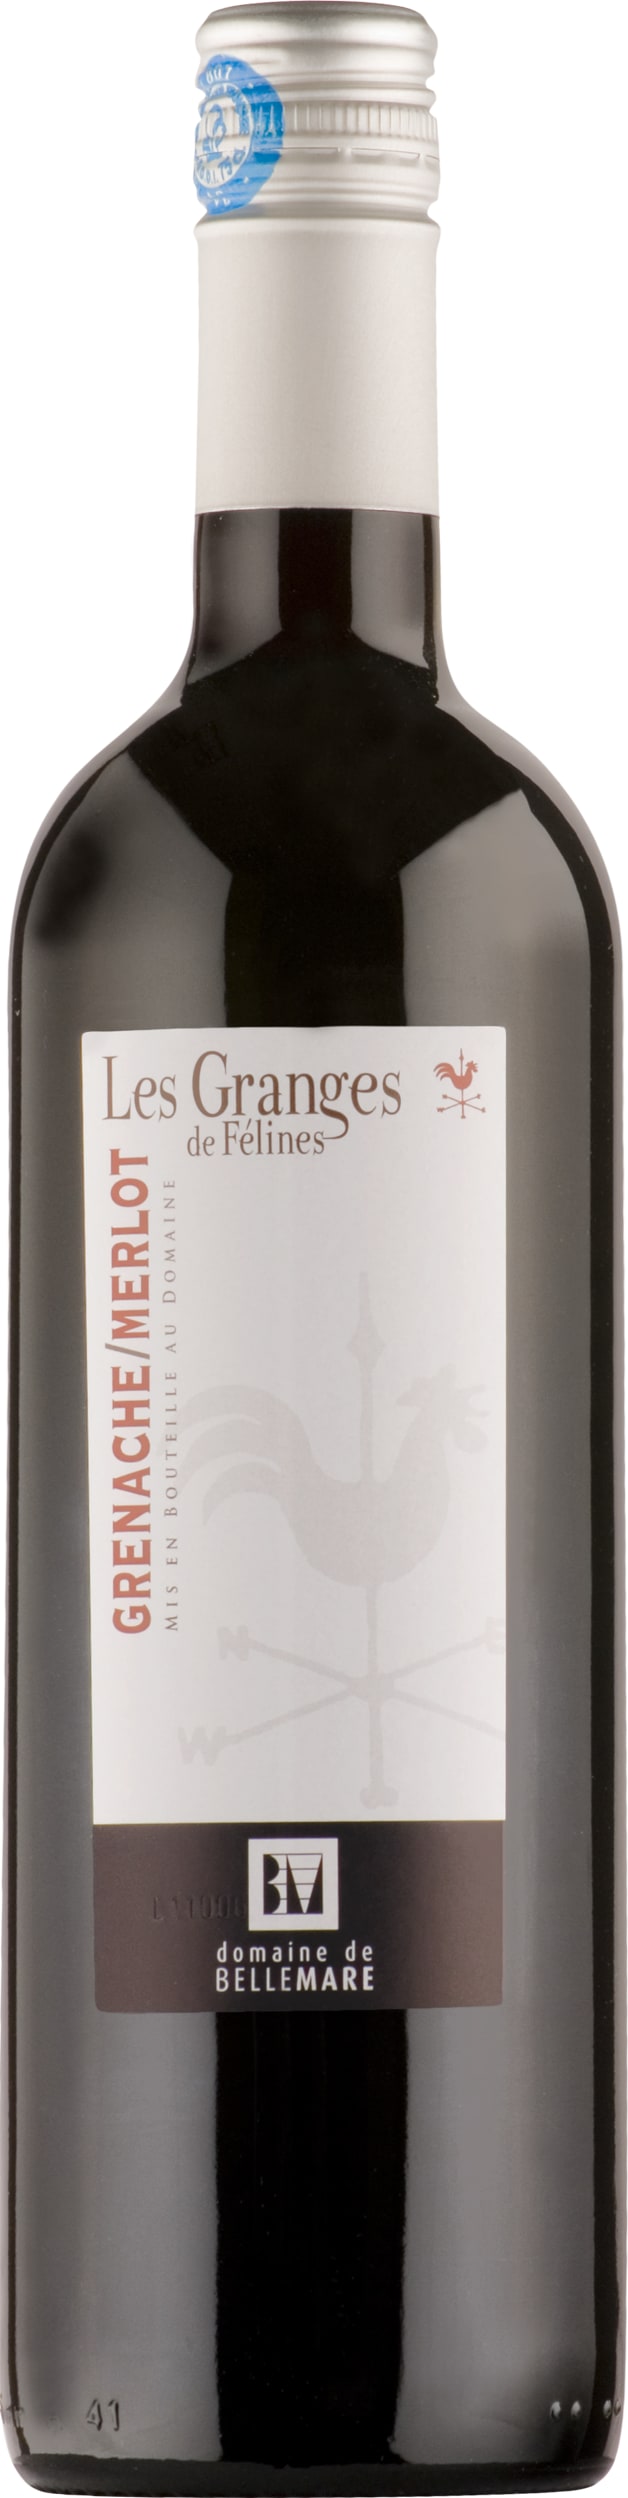 Domaine de Belle Mare Grenache-Merlot, Les Granges de Felines 2022 75cl - Buy Domaine de Belle Mare Wines from GREAT WINES DIRECT wine shop